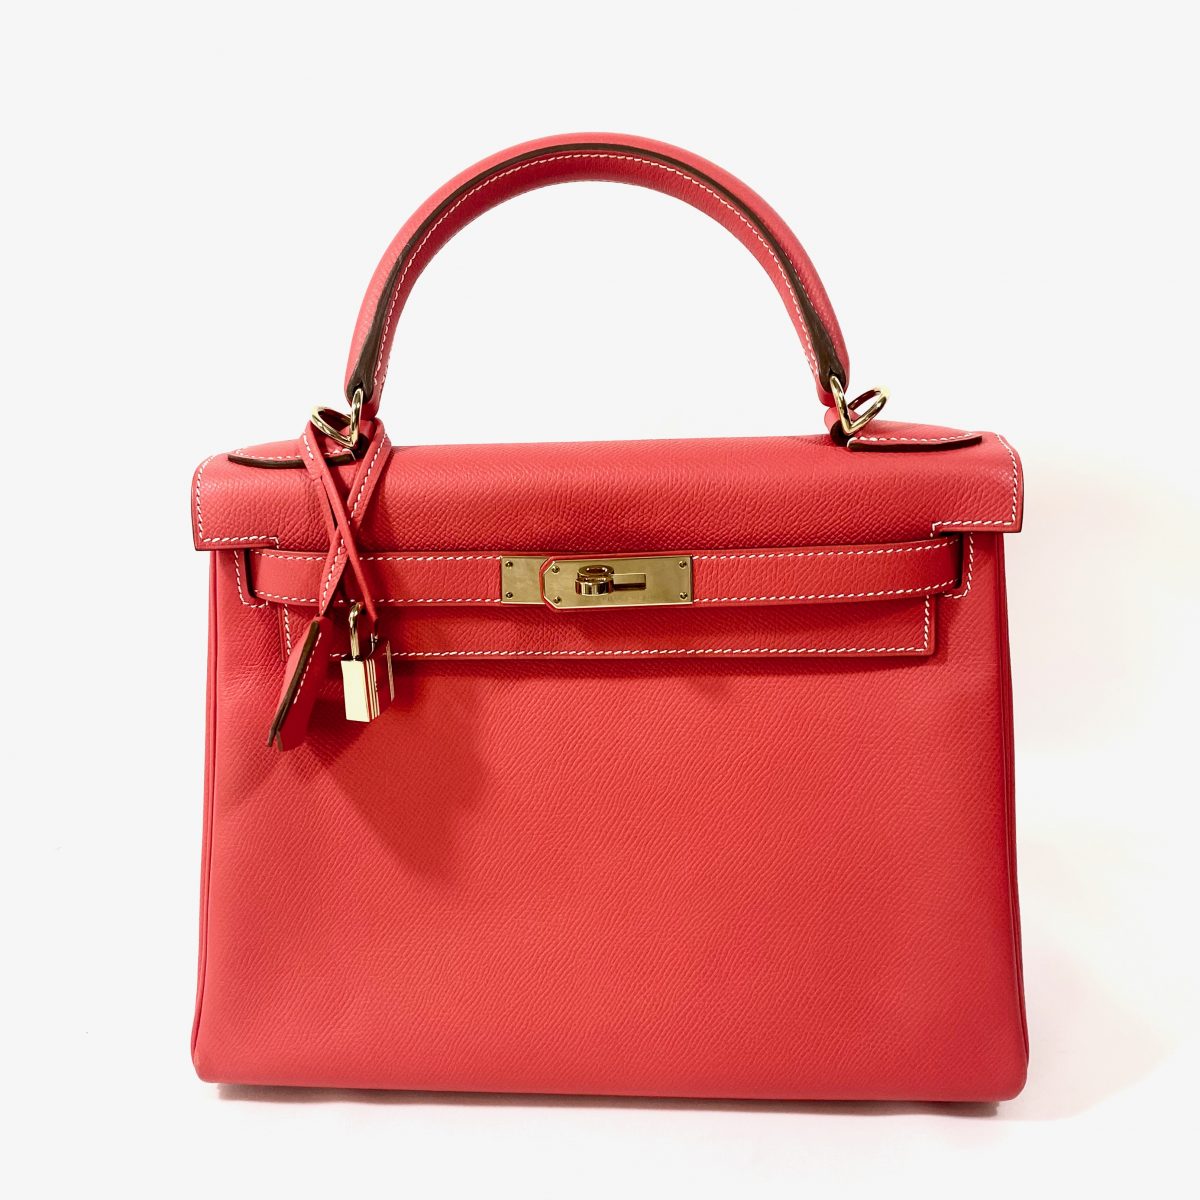 Hermès designer bags